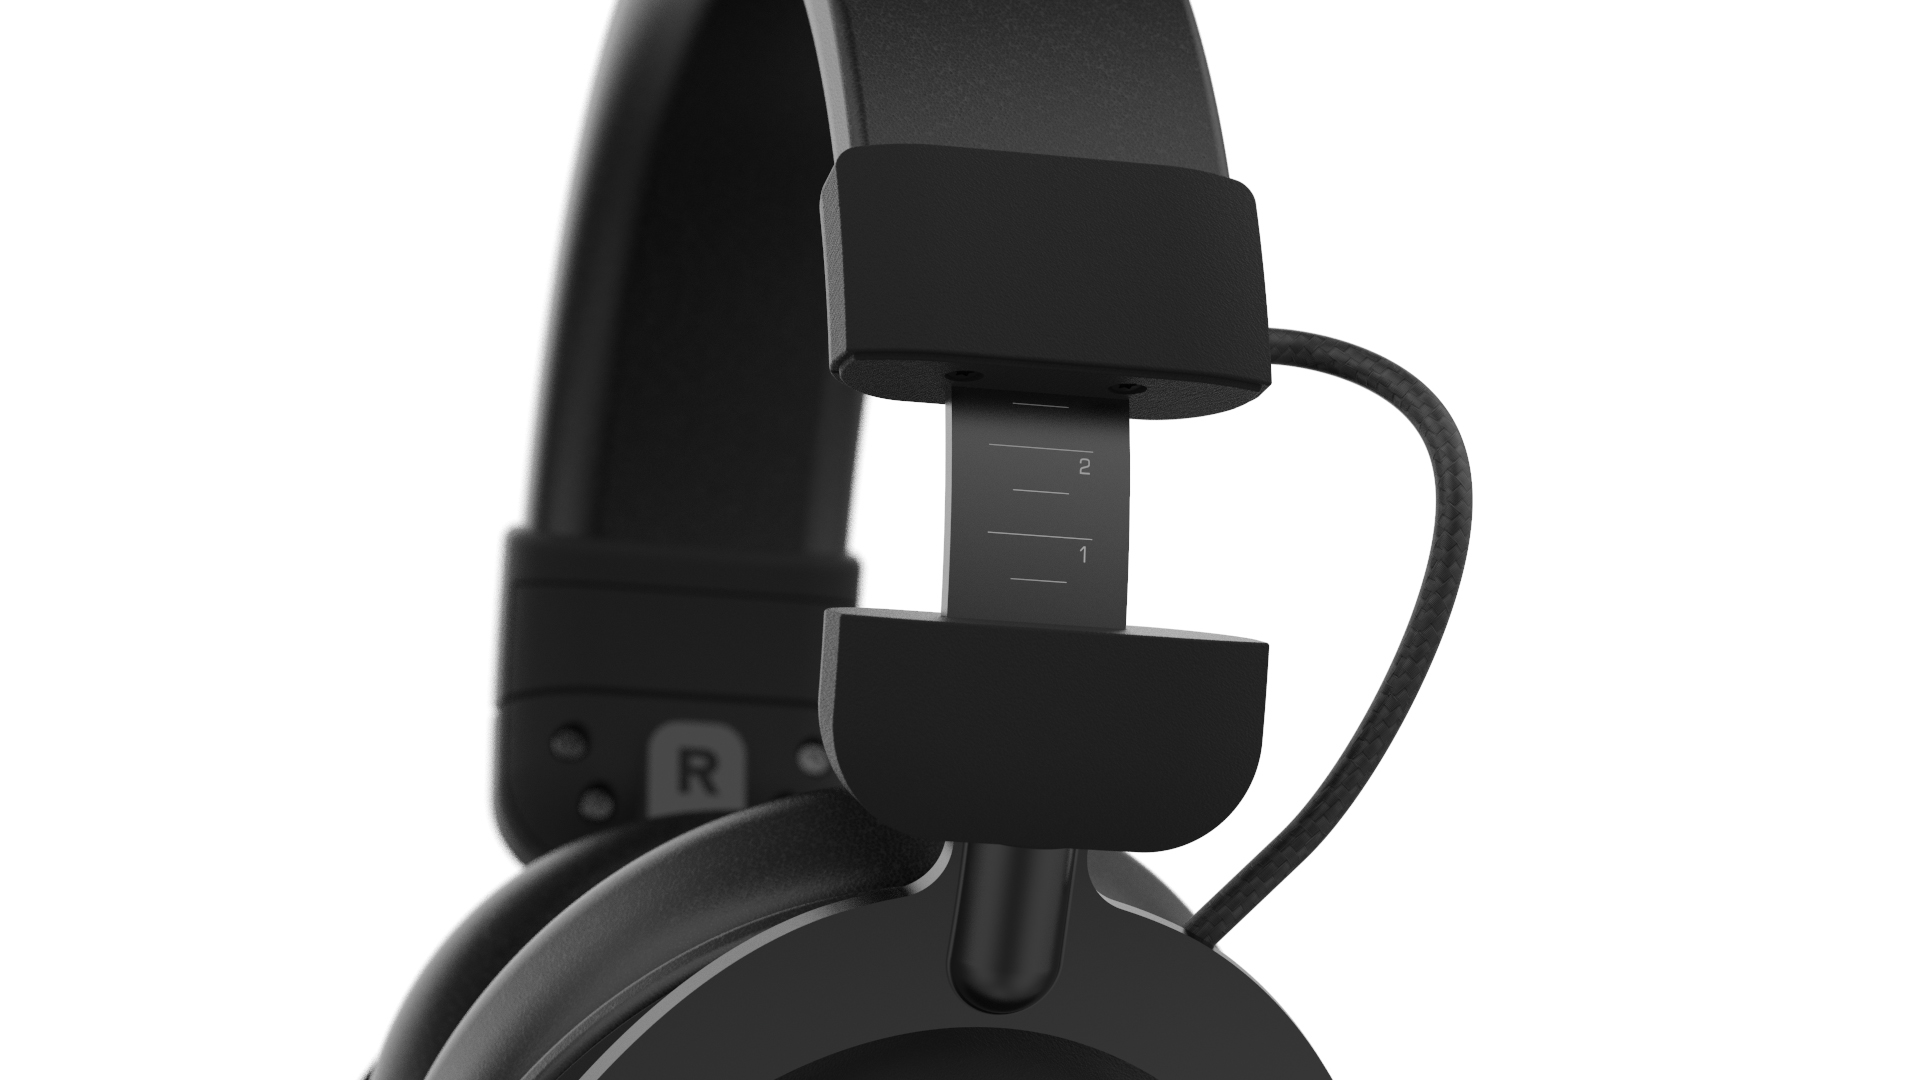 QPAD Gaming Schwarz Over-ear QPAD®|QH900, Bluetooth Headset